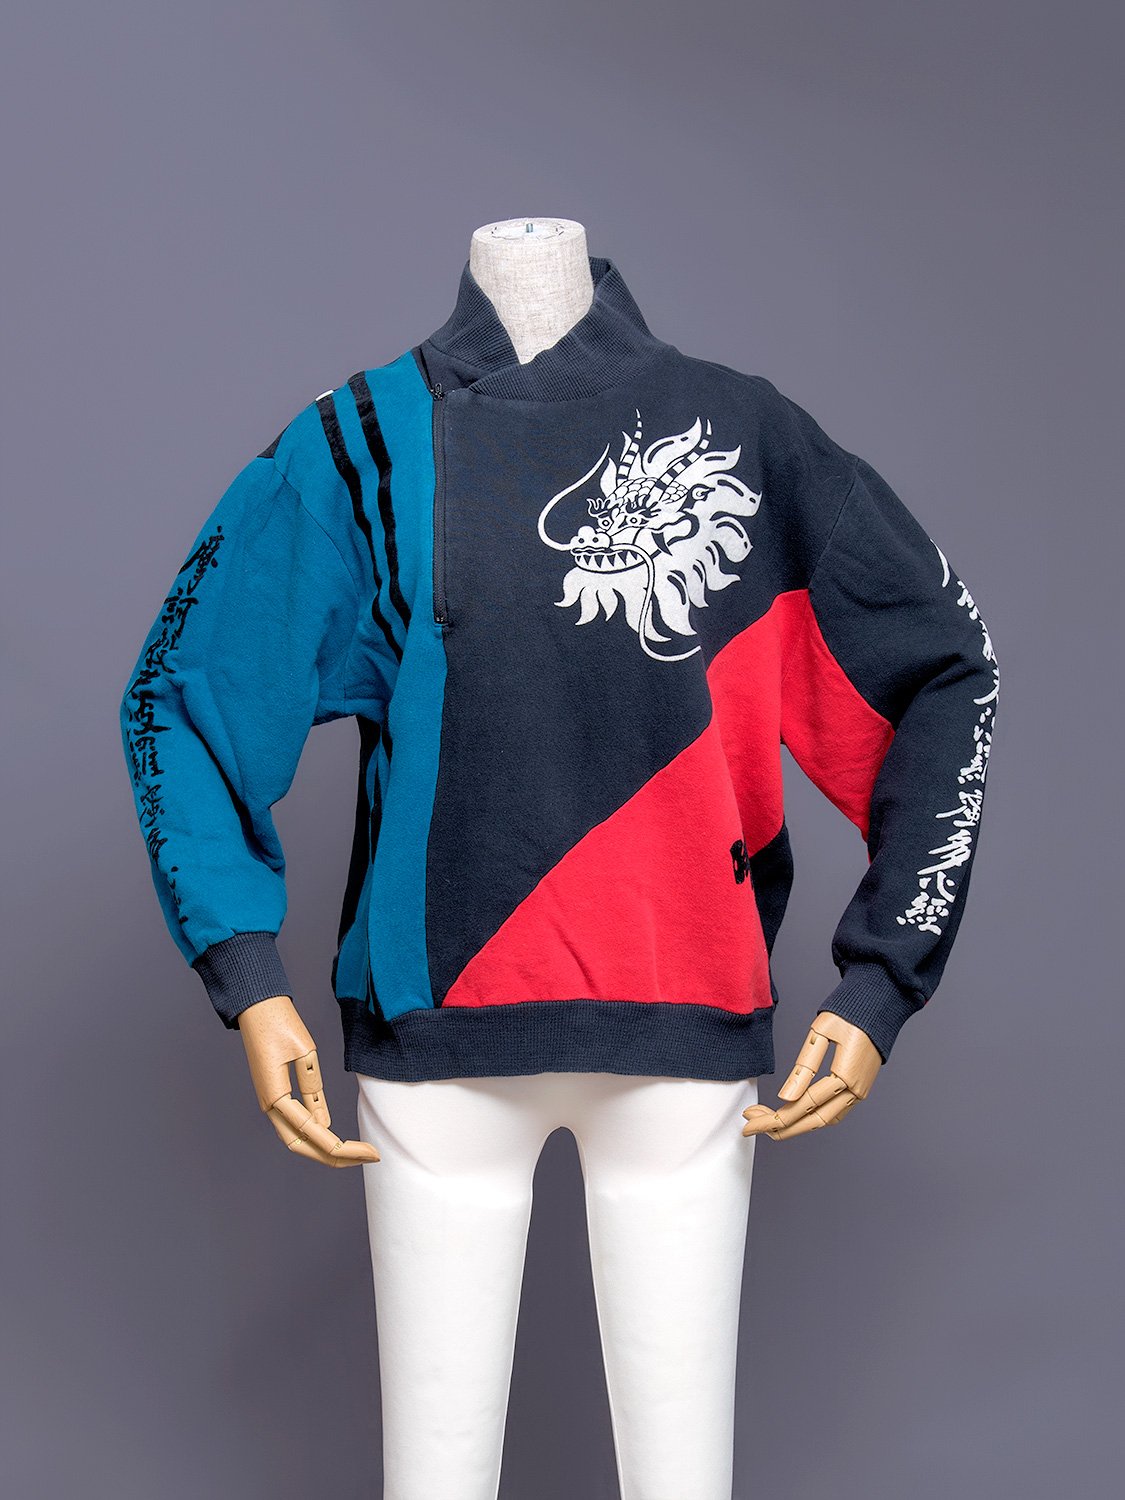 Kansai Yamamoto Zip Collar Sweatshirt, 1980s – Japanese Fashion 